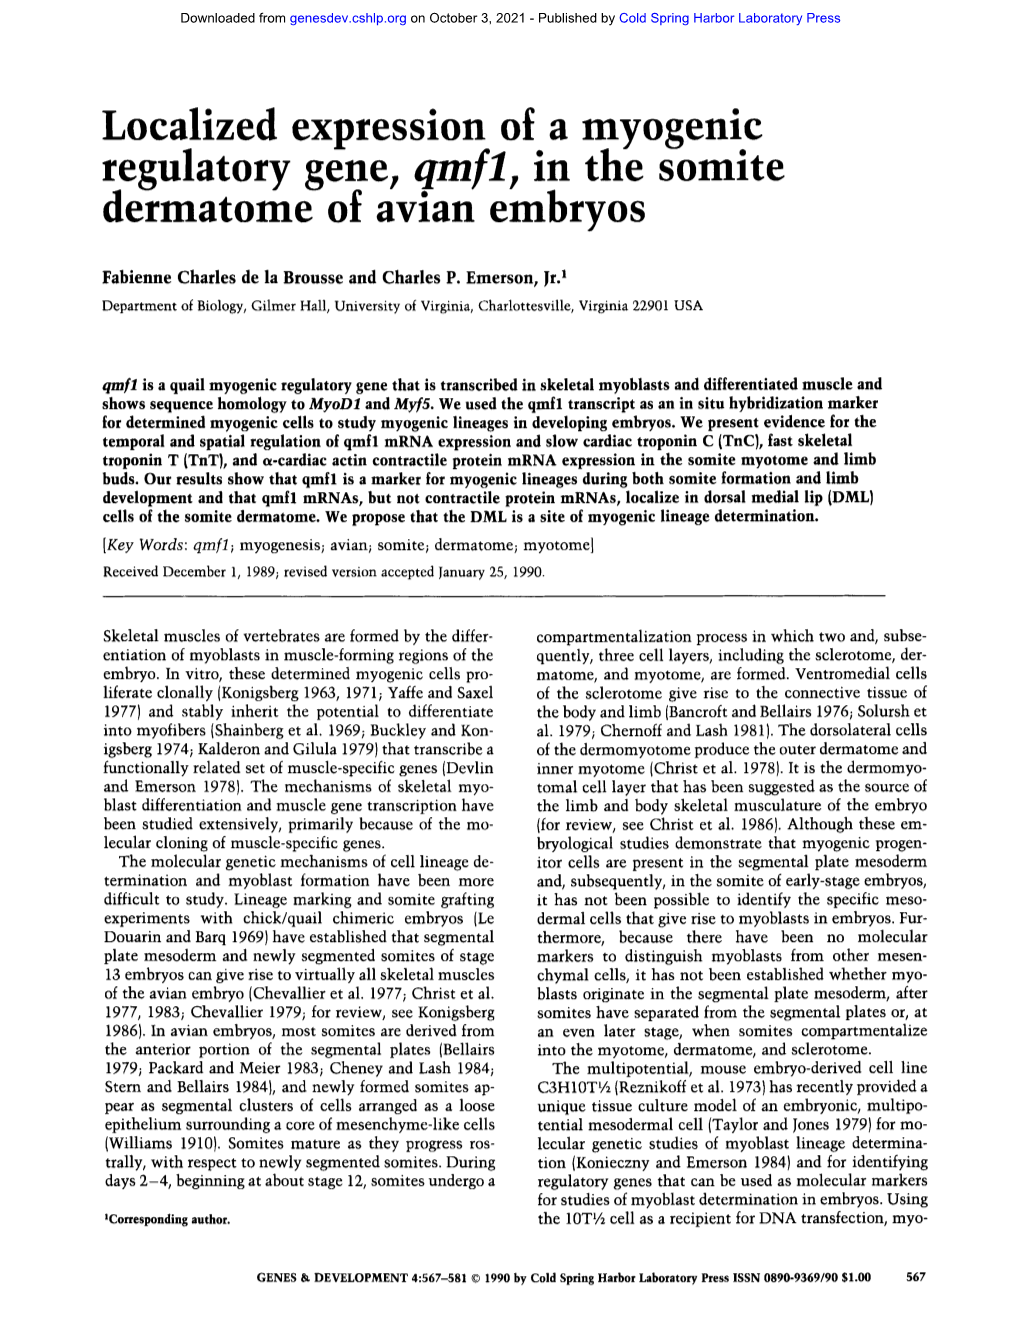 Localized Expression of a Myogenic Regulatory Gene, Qmfl, in the Somlte Dermatome of Avian Embryos